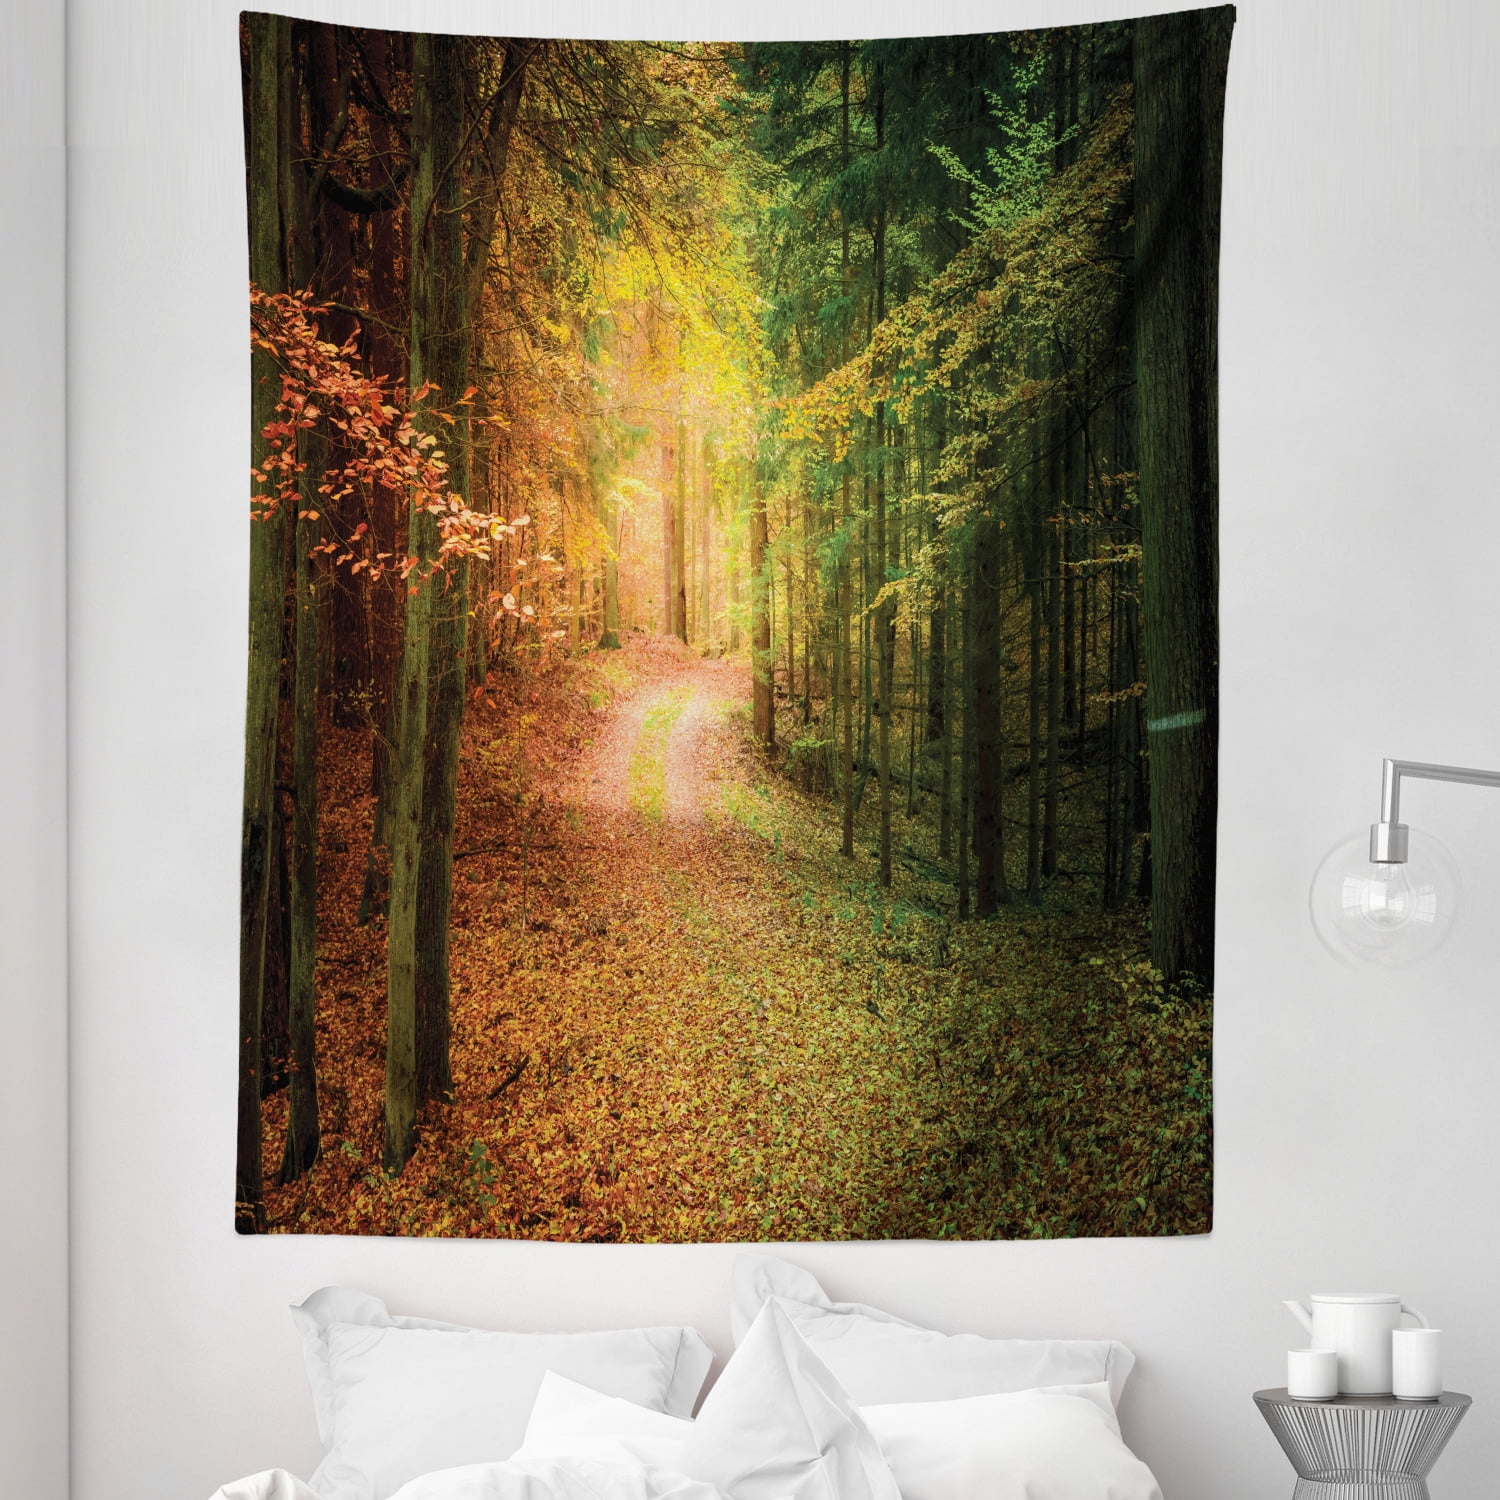 Natural Scenery Living Room Wall Hanging Bedroom Tapestry Blanket Art Decor Gift 